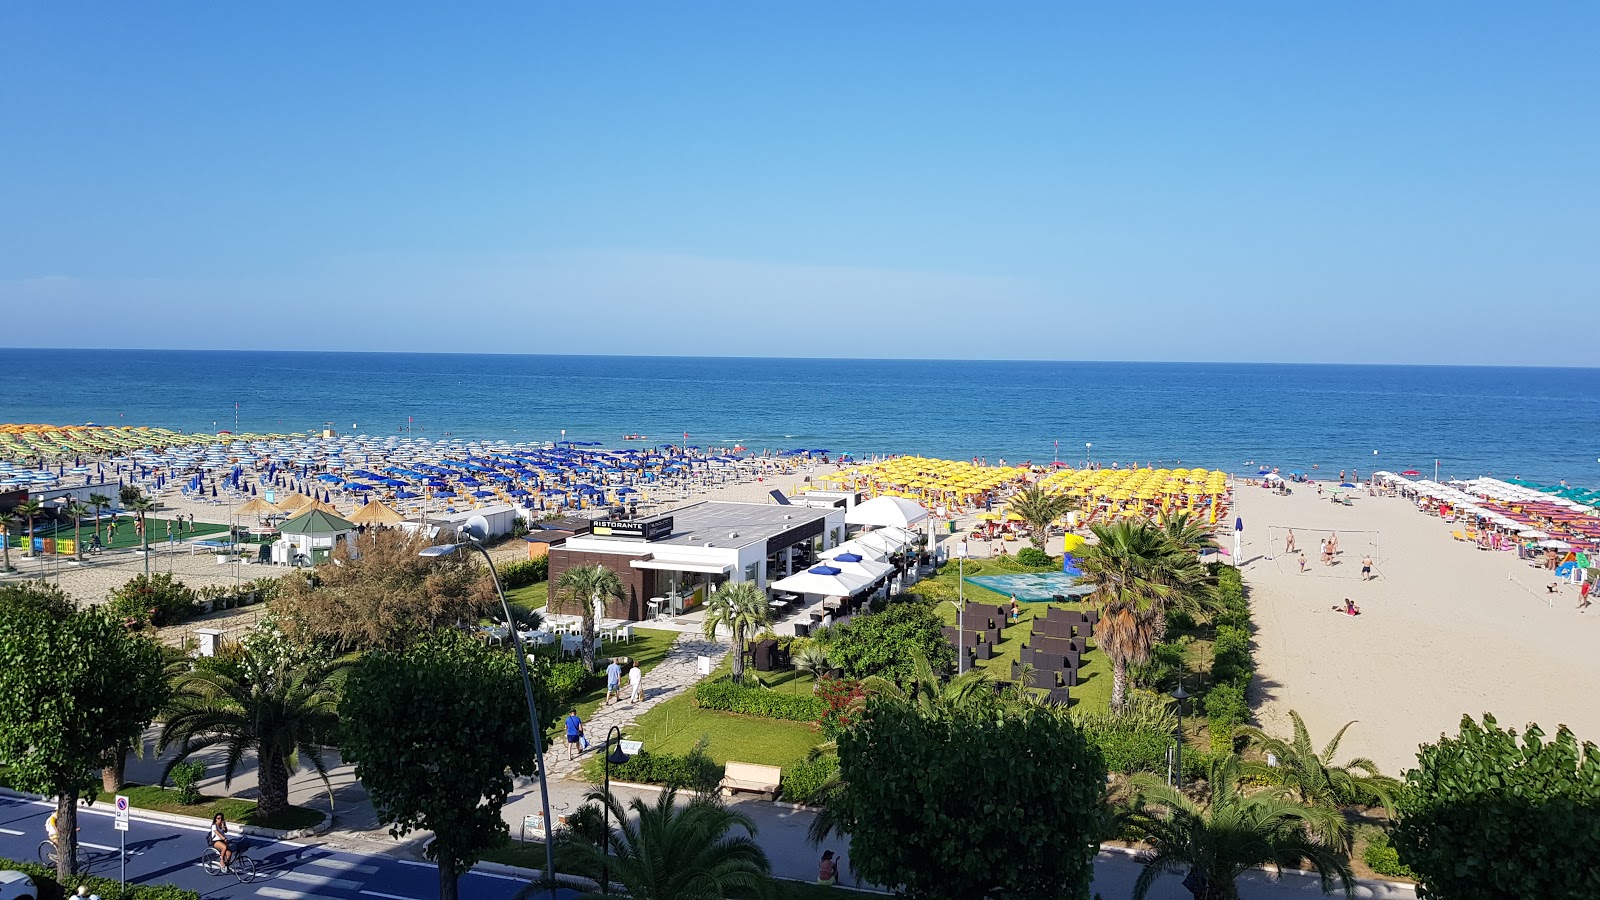 Foto av Spiaggia di Alba Adriatica med lång rak strand